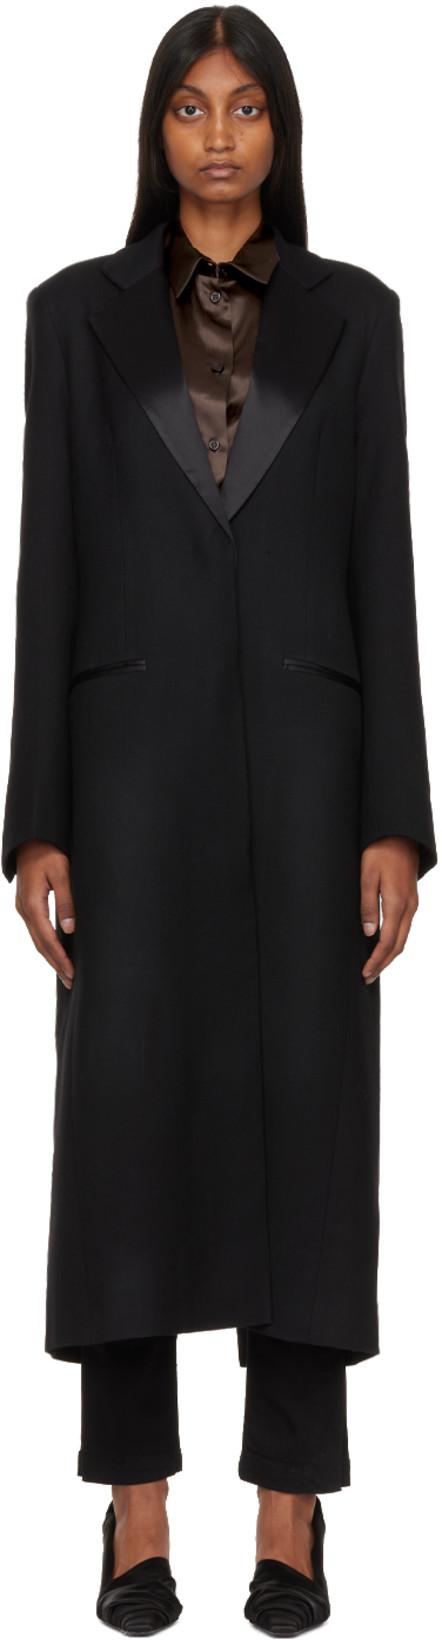 Black Long Wool Coat by BITE